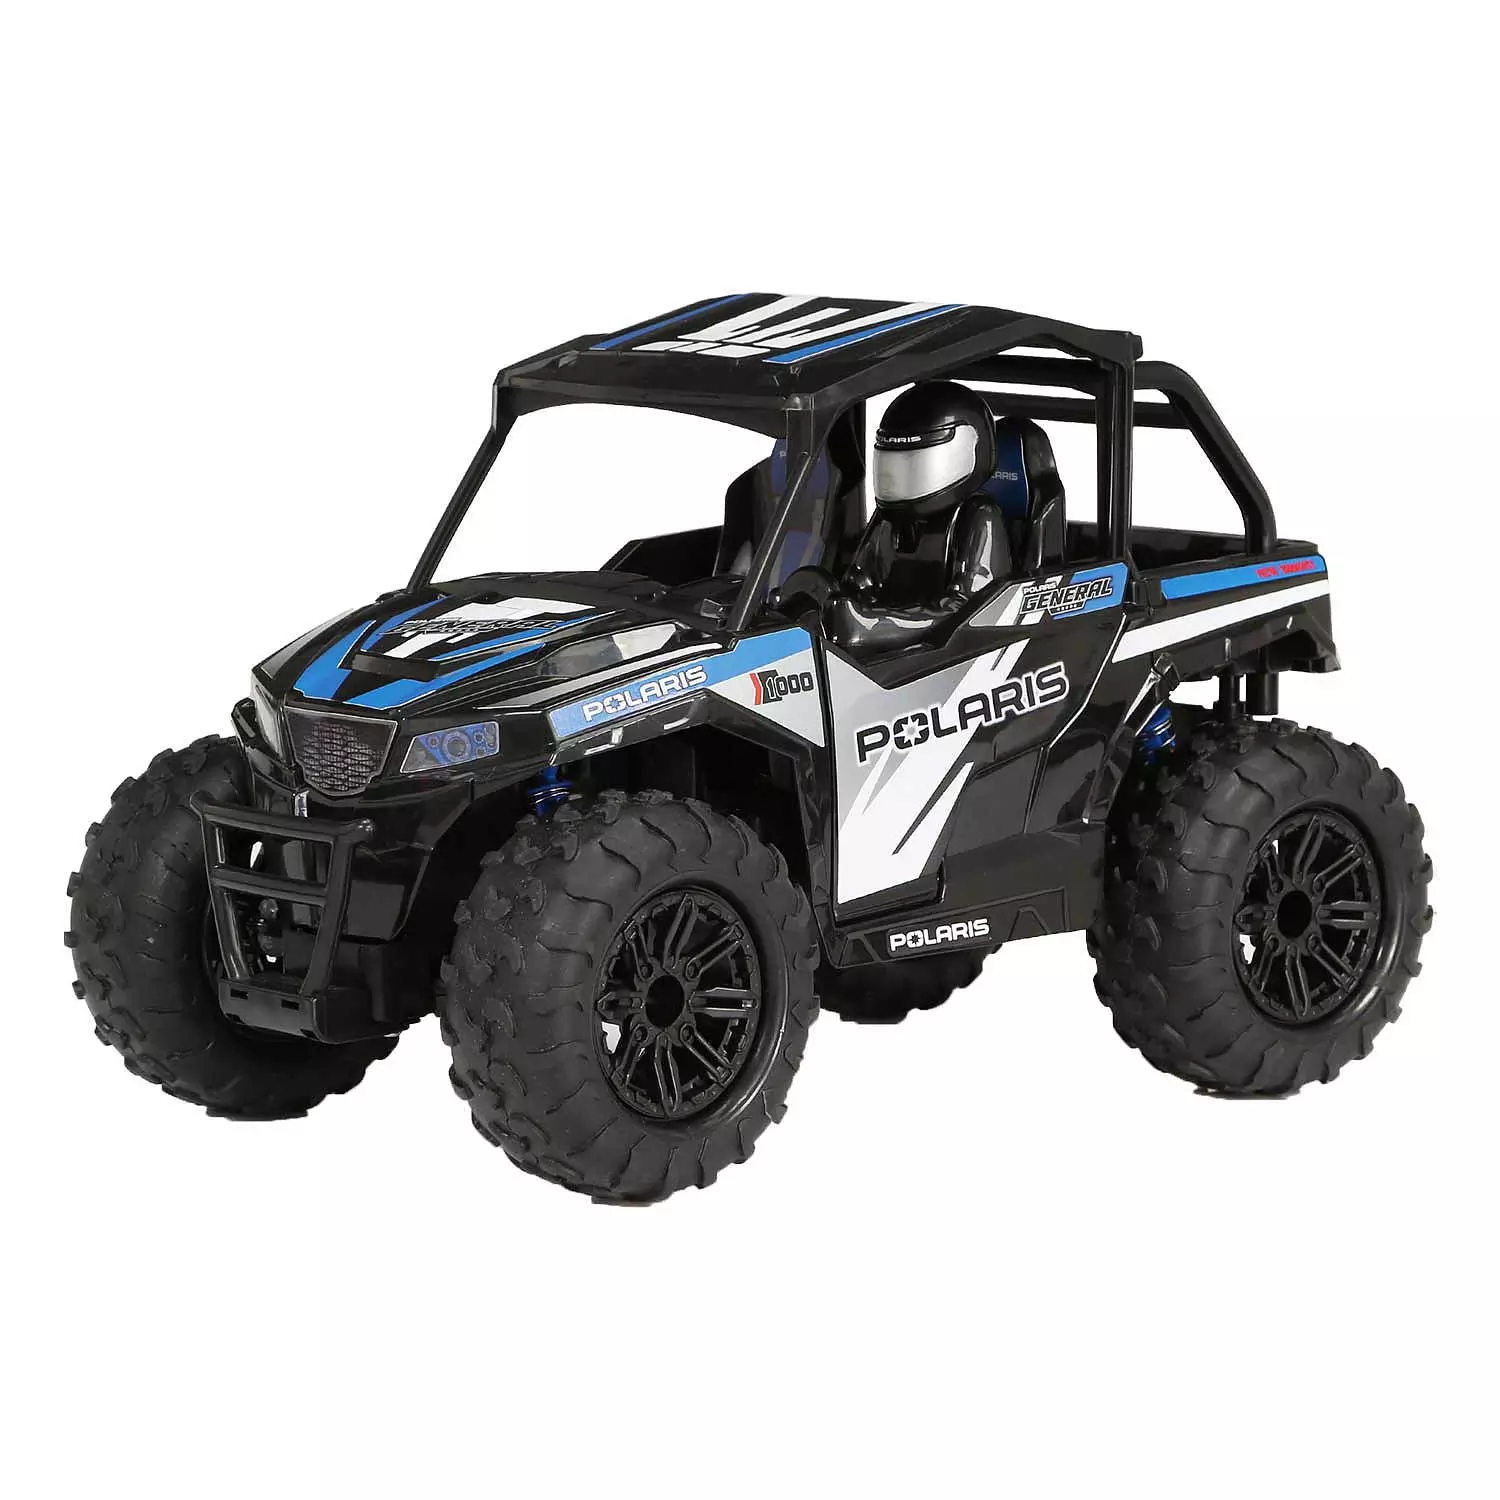 R/C Polaris ATV buggy, blue